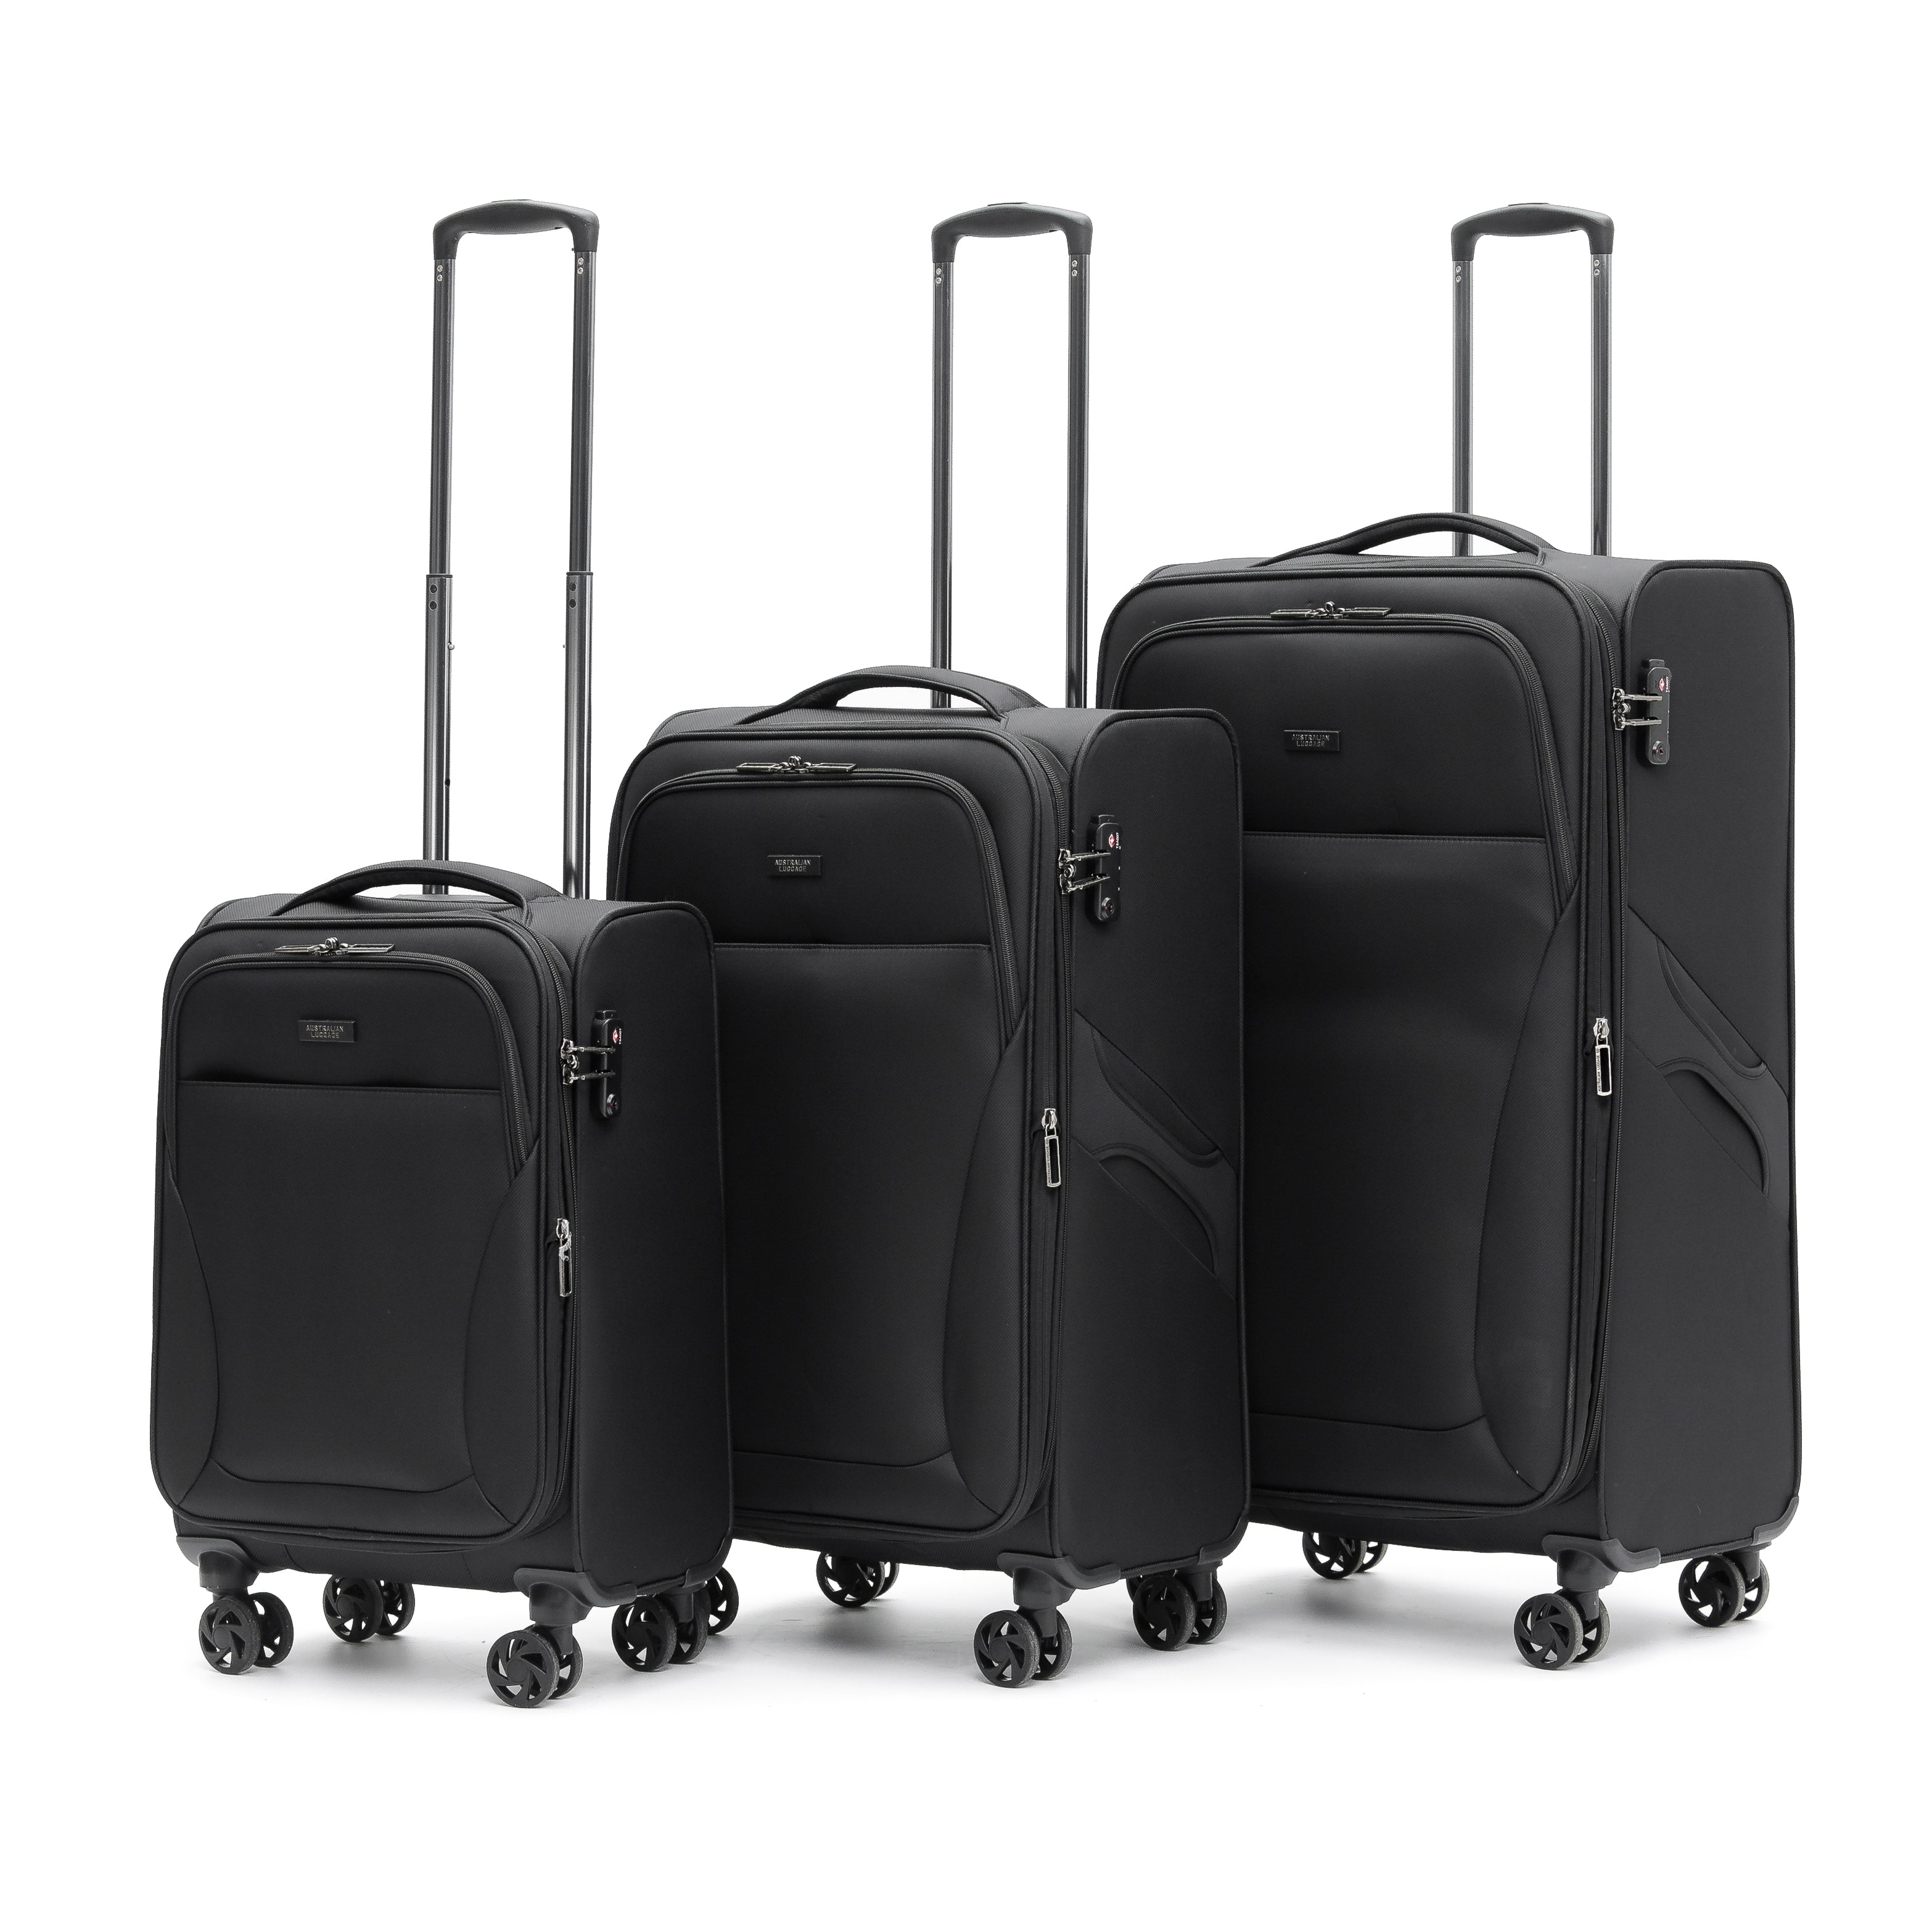 Aus Luggage - WINGS Set of 3 Suitcases - Black